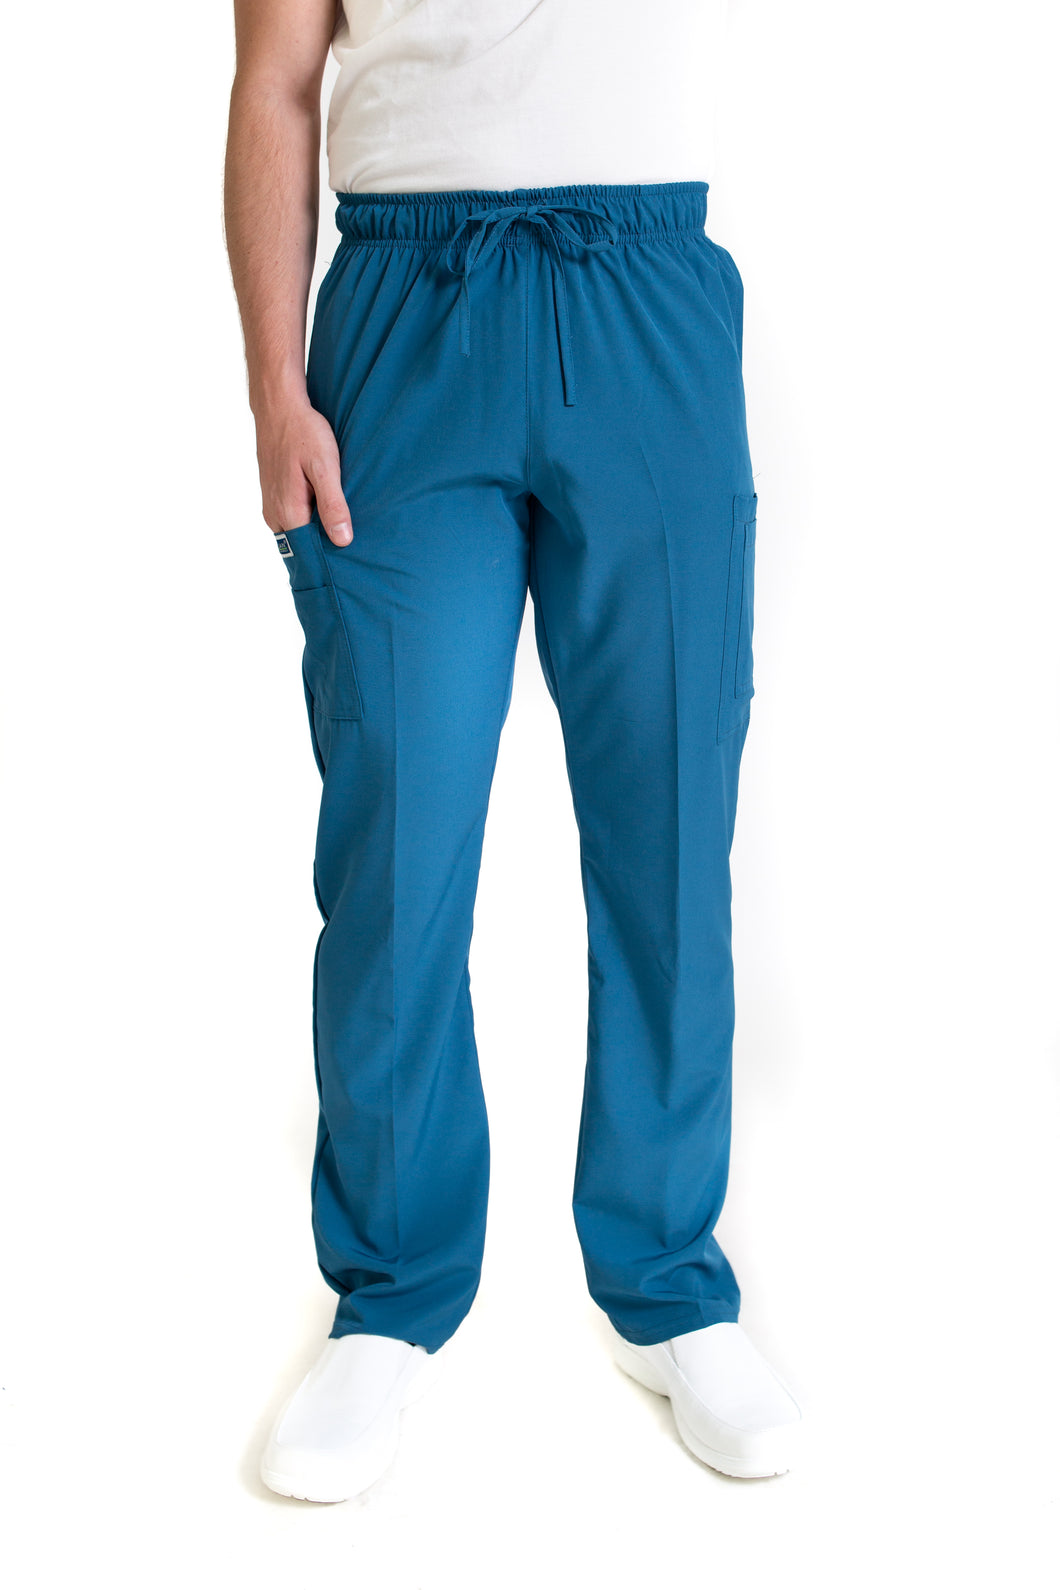 Pantalón Pant EA-02P REPELENTE A FLUIDOS-Color CARIBE HOMBRE-HASSAN Uniformes